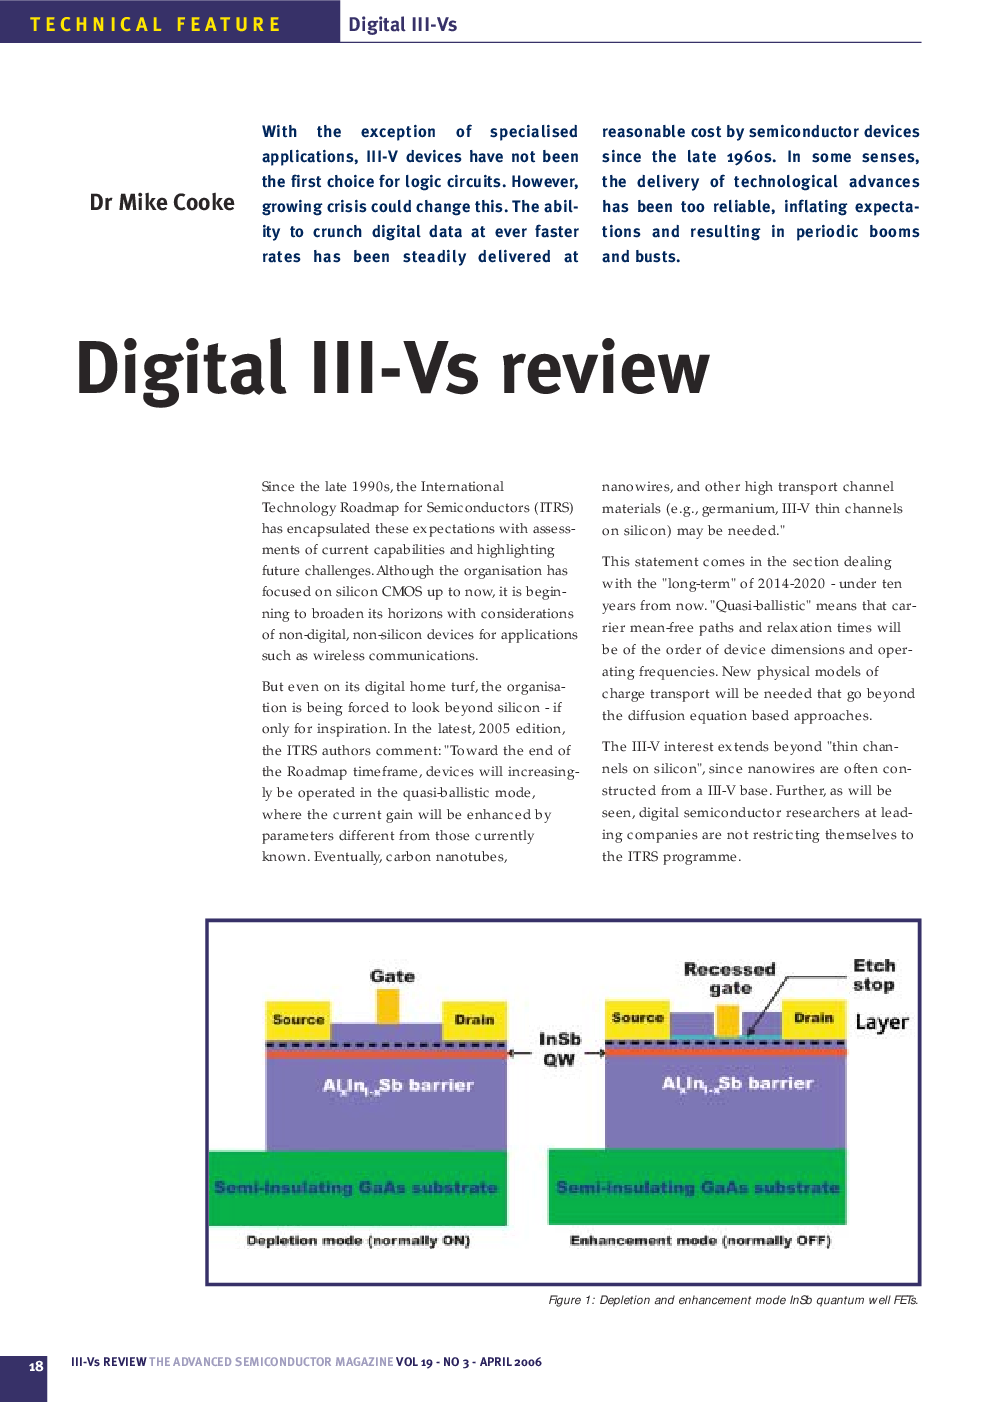 Digital III-Vs review